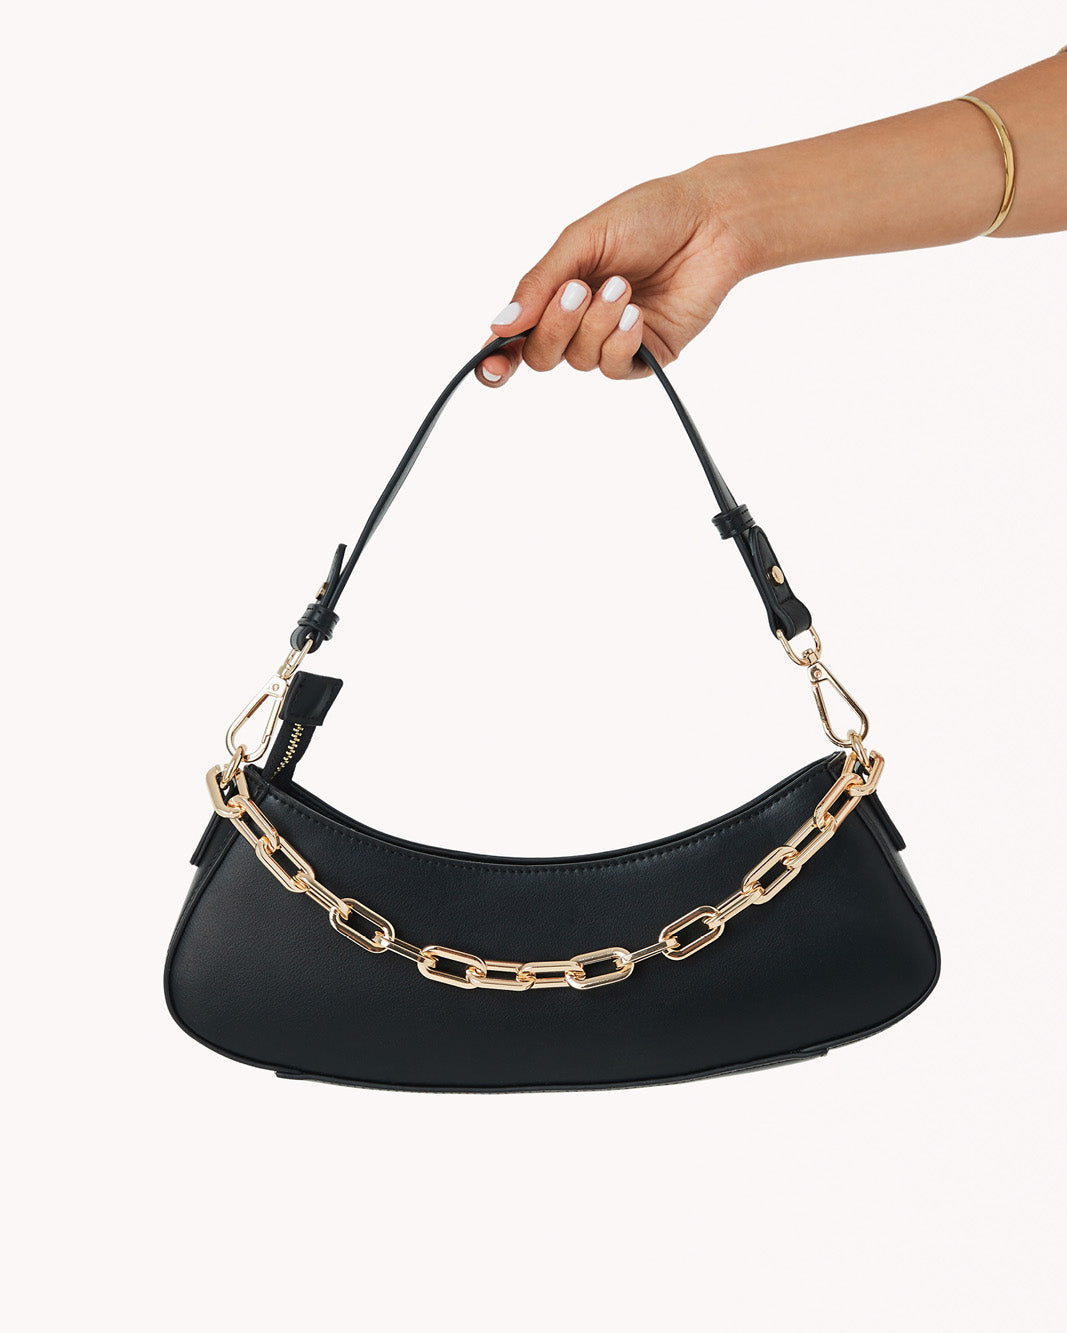 MAPLE SHOULDER BAG - BLACK-Handbags-Billini--Billini